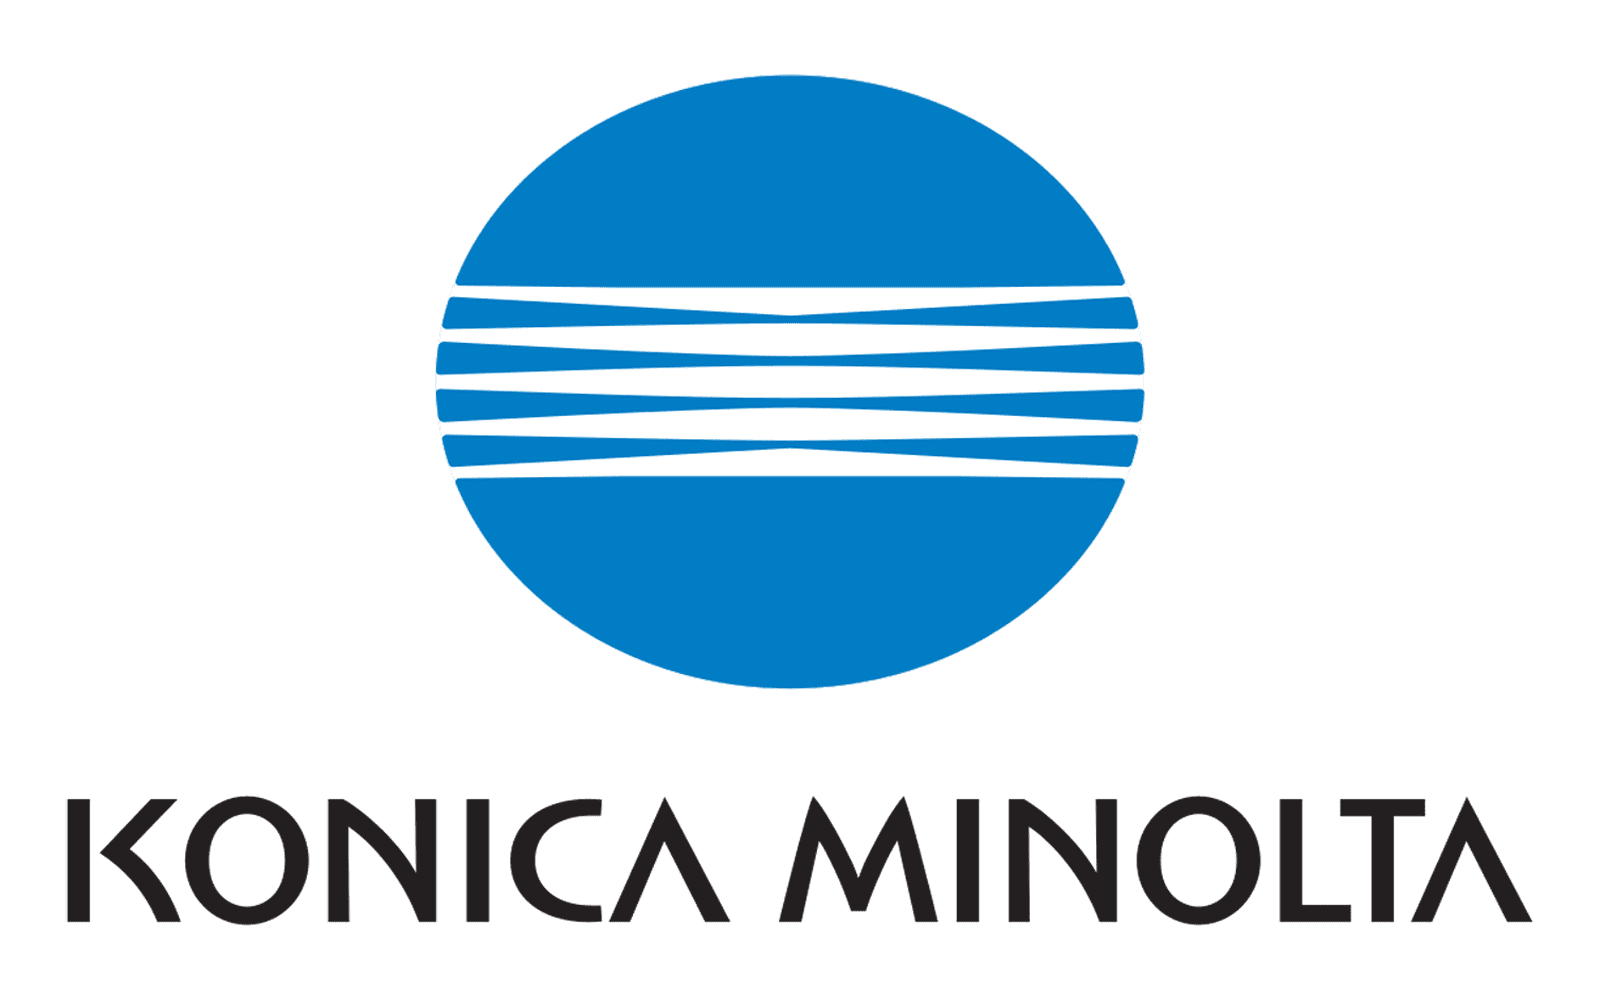 Konica Minolta launches Go-Green initiative, starts deliveries of Products via EVs